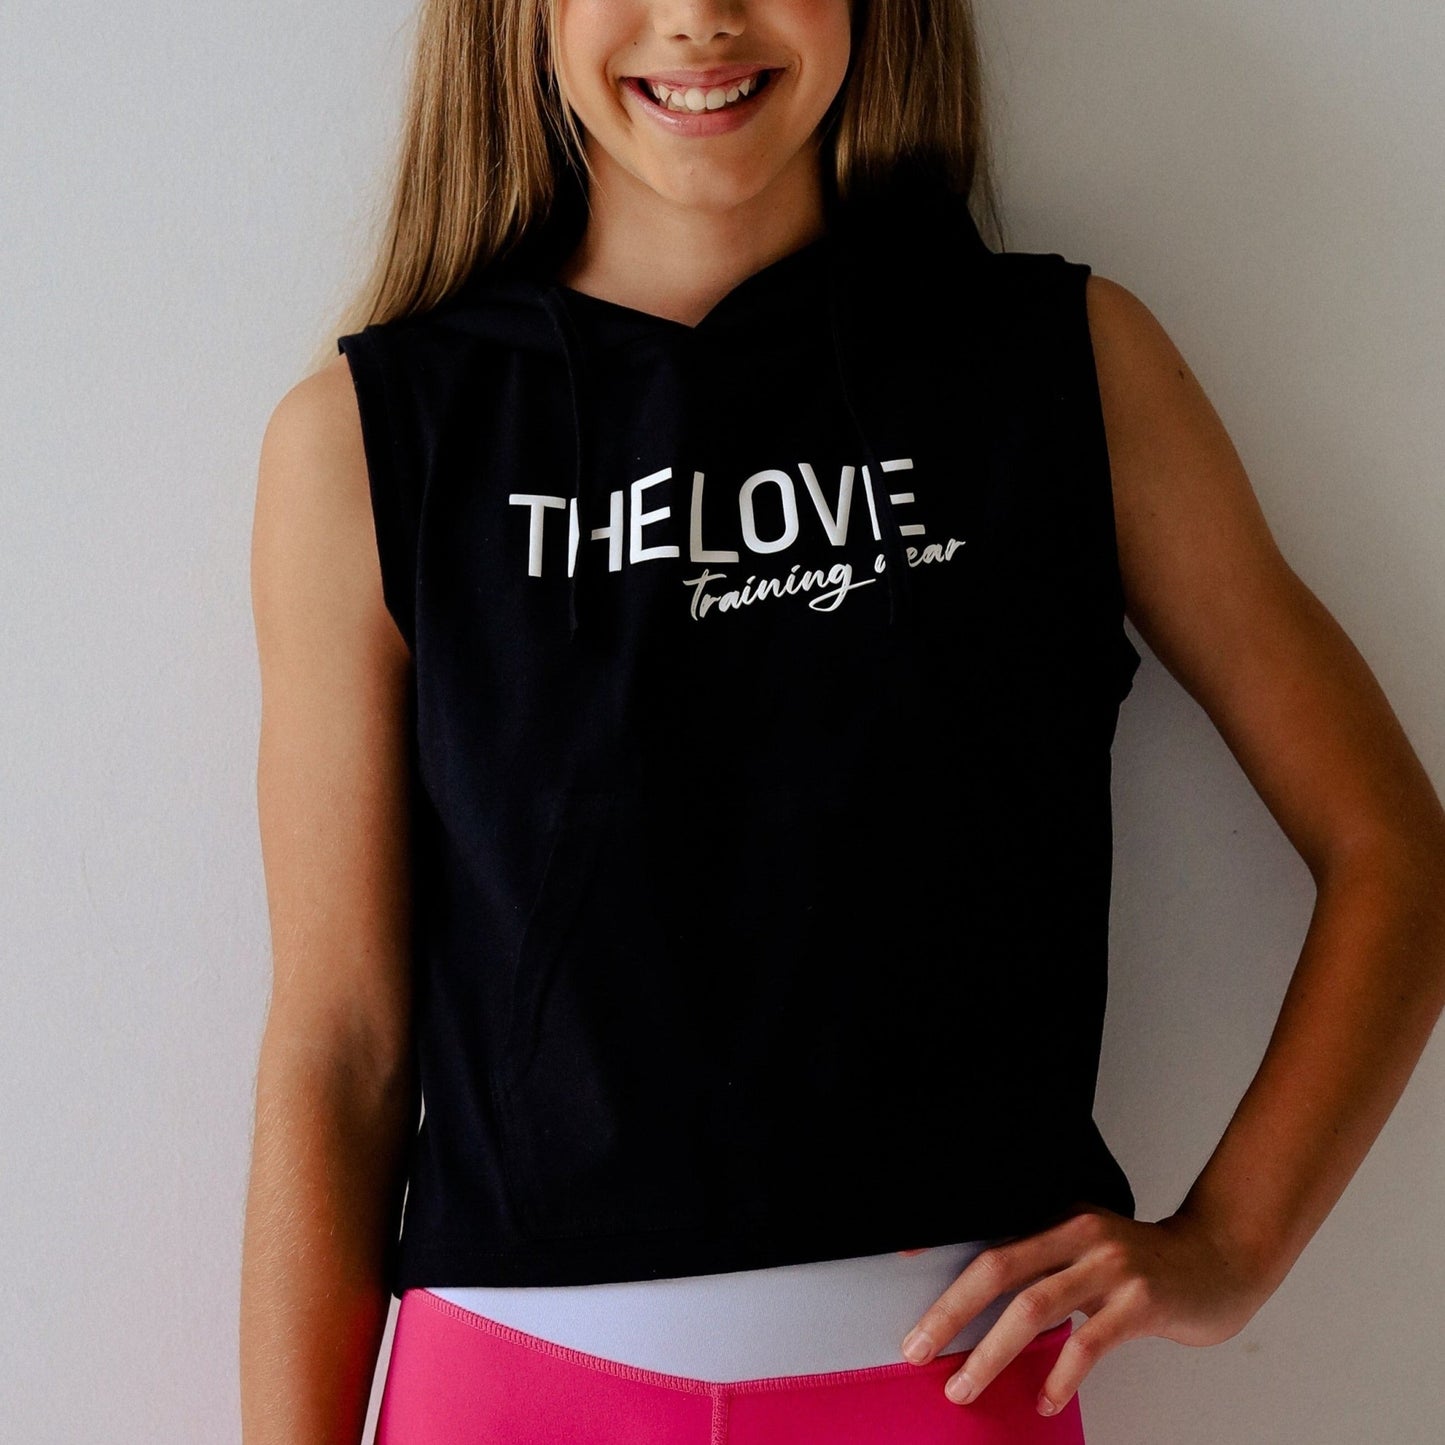 Black Sleeveless Hoodie - The Love Training Wear. Easy to wear sleeveless hoodie for girls. Size 6 - 16.  Brisbane Qld.